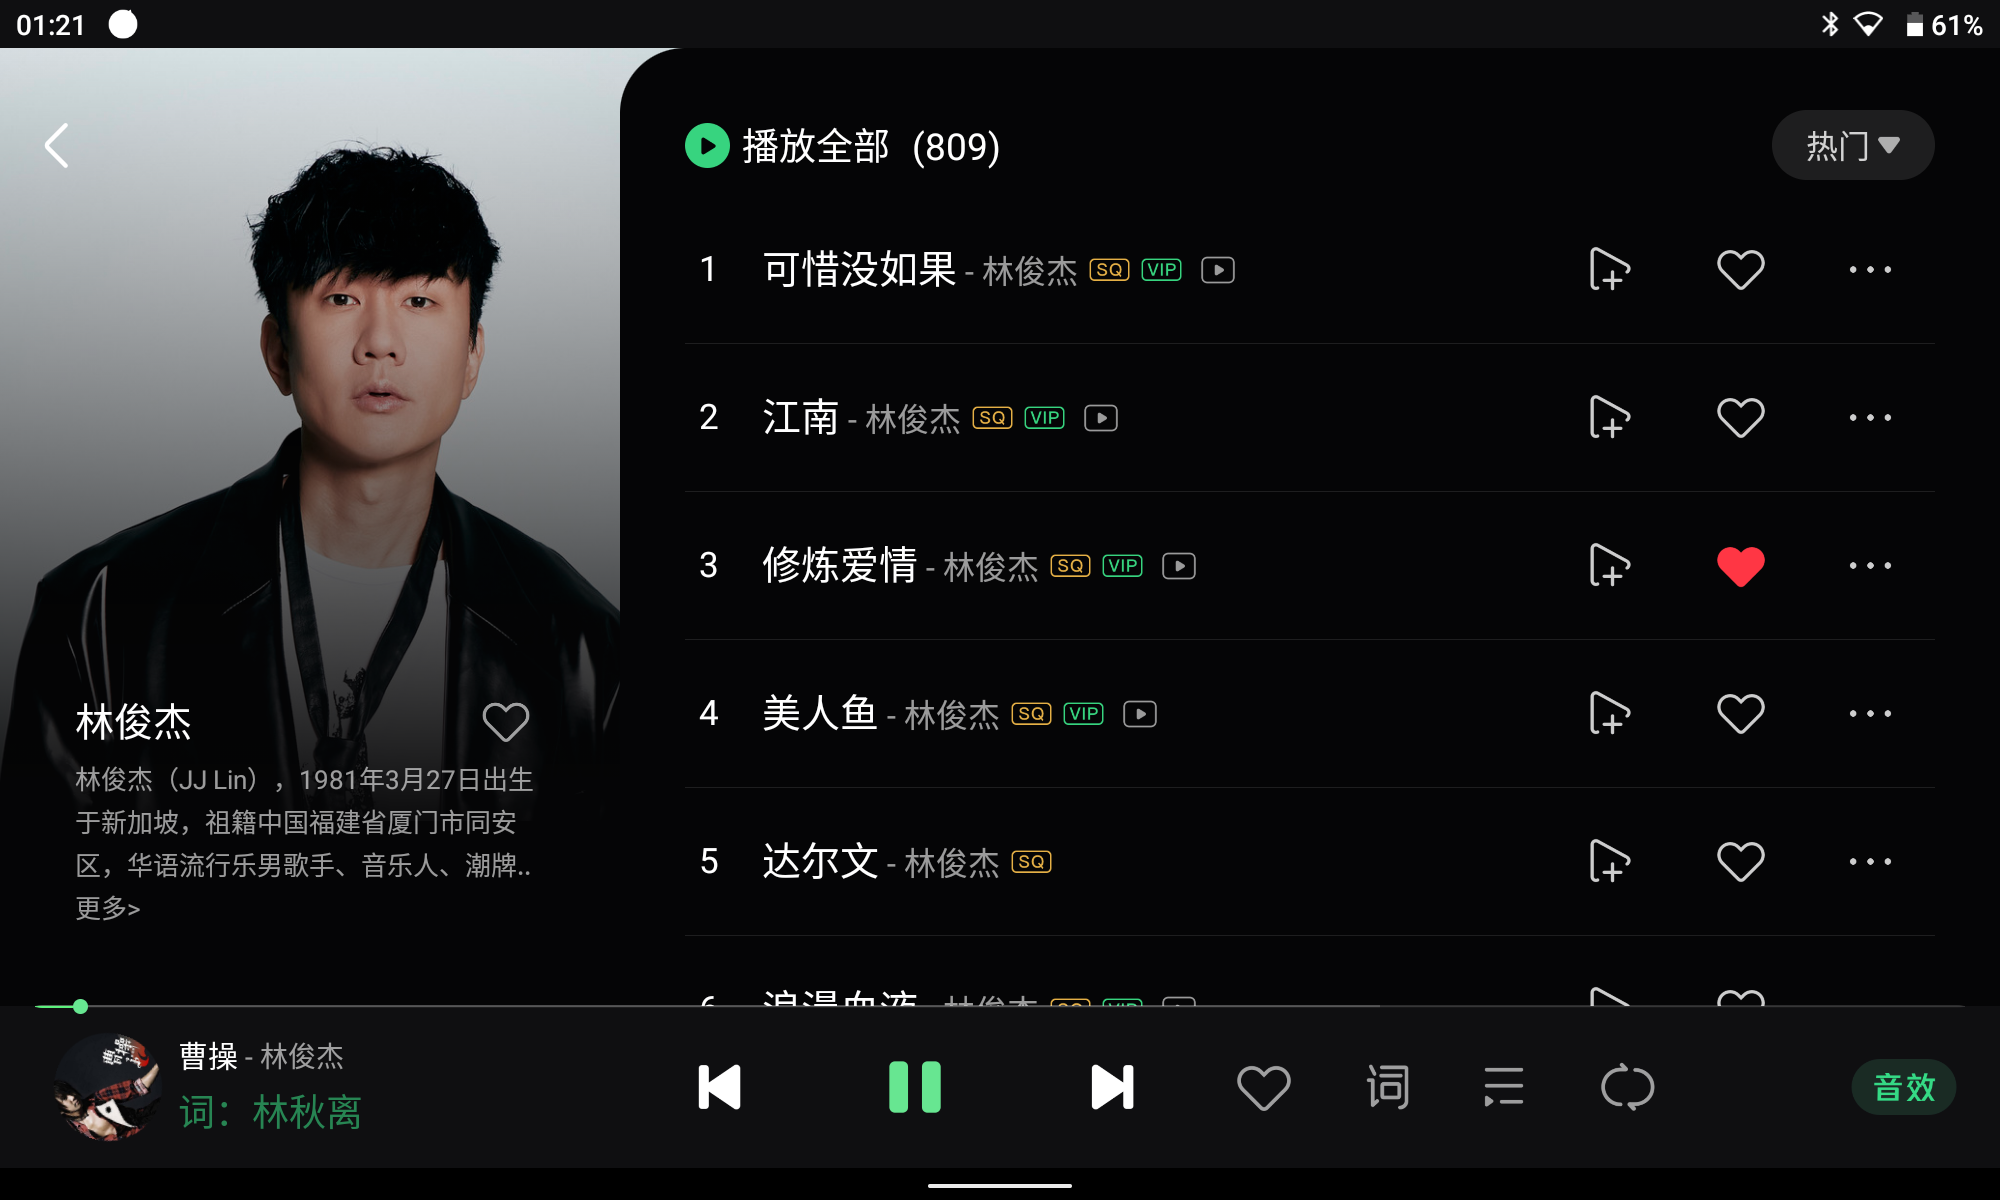 QQ最新音乐车机版2.4.2.0  官方车载版  横屏UI大升级